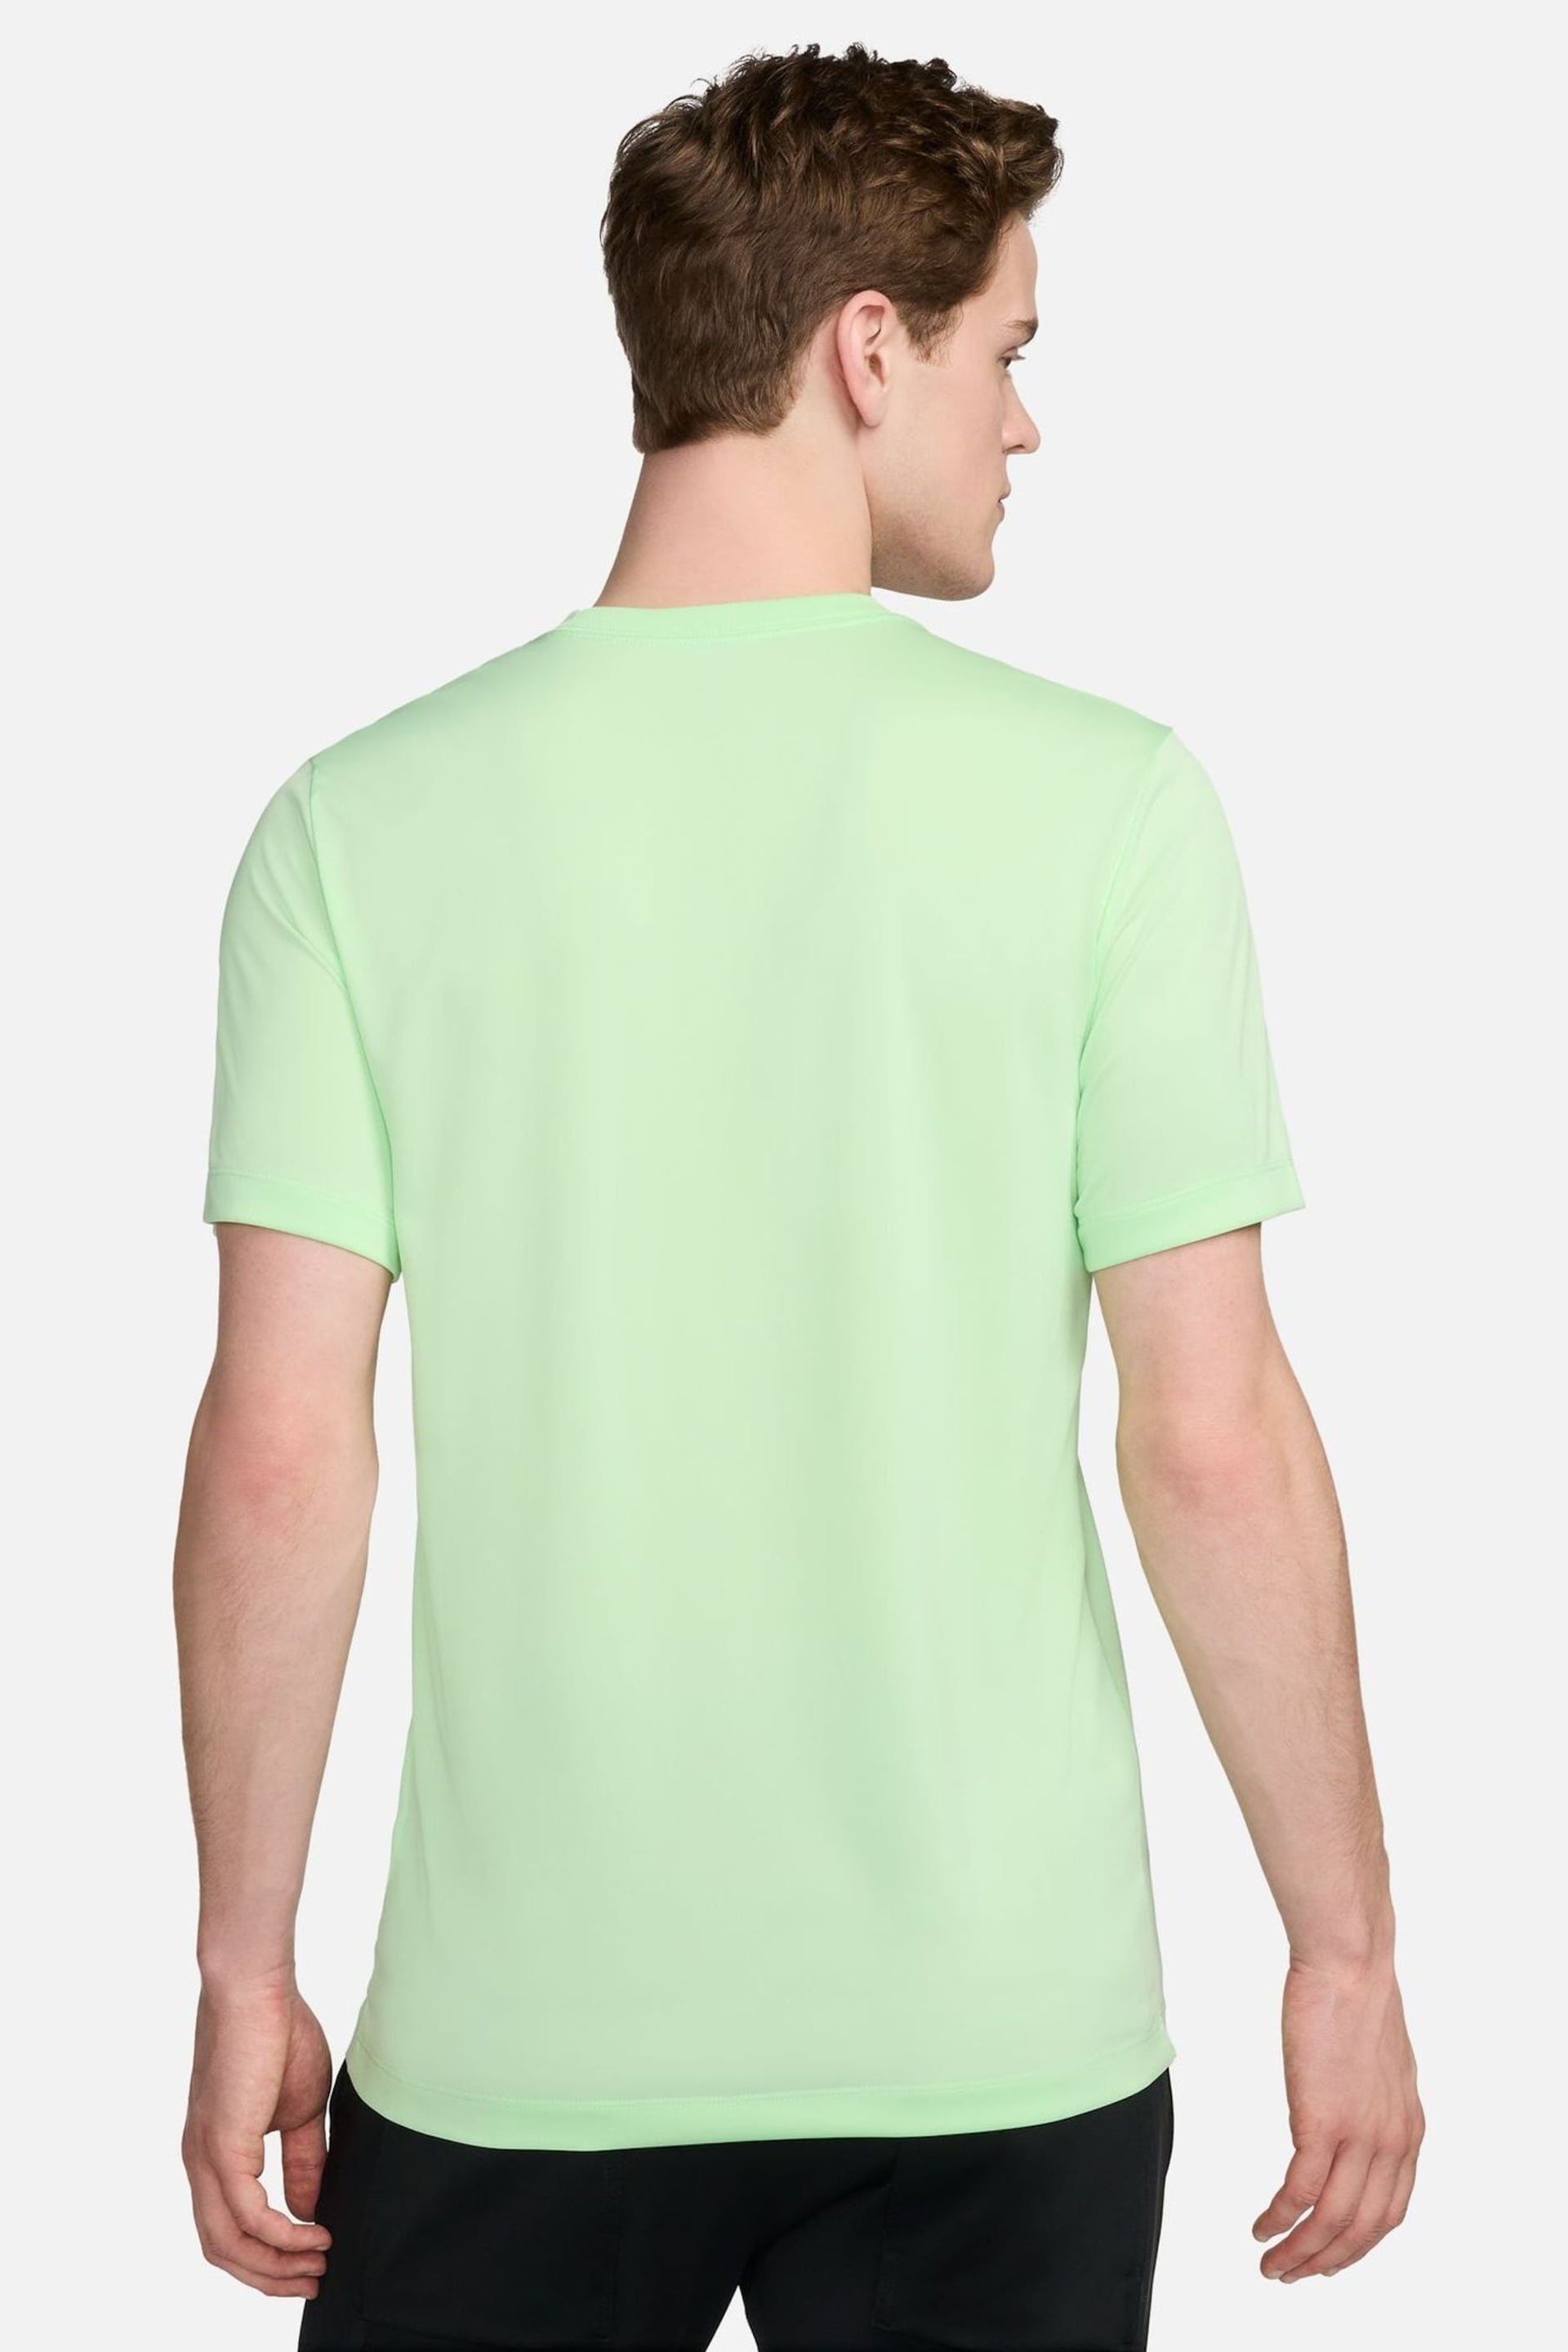 Nike Light Green Dri-FIT Legend Training T-Shirt - Image 2 of 4